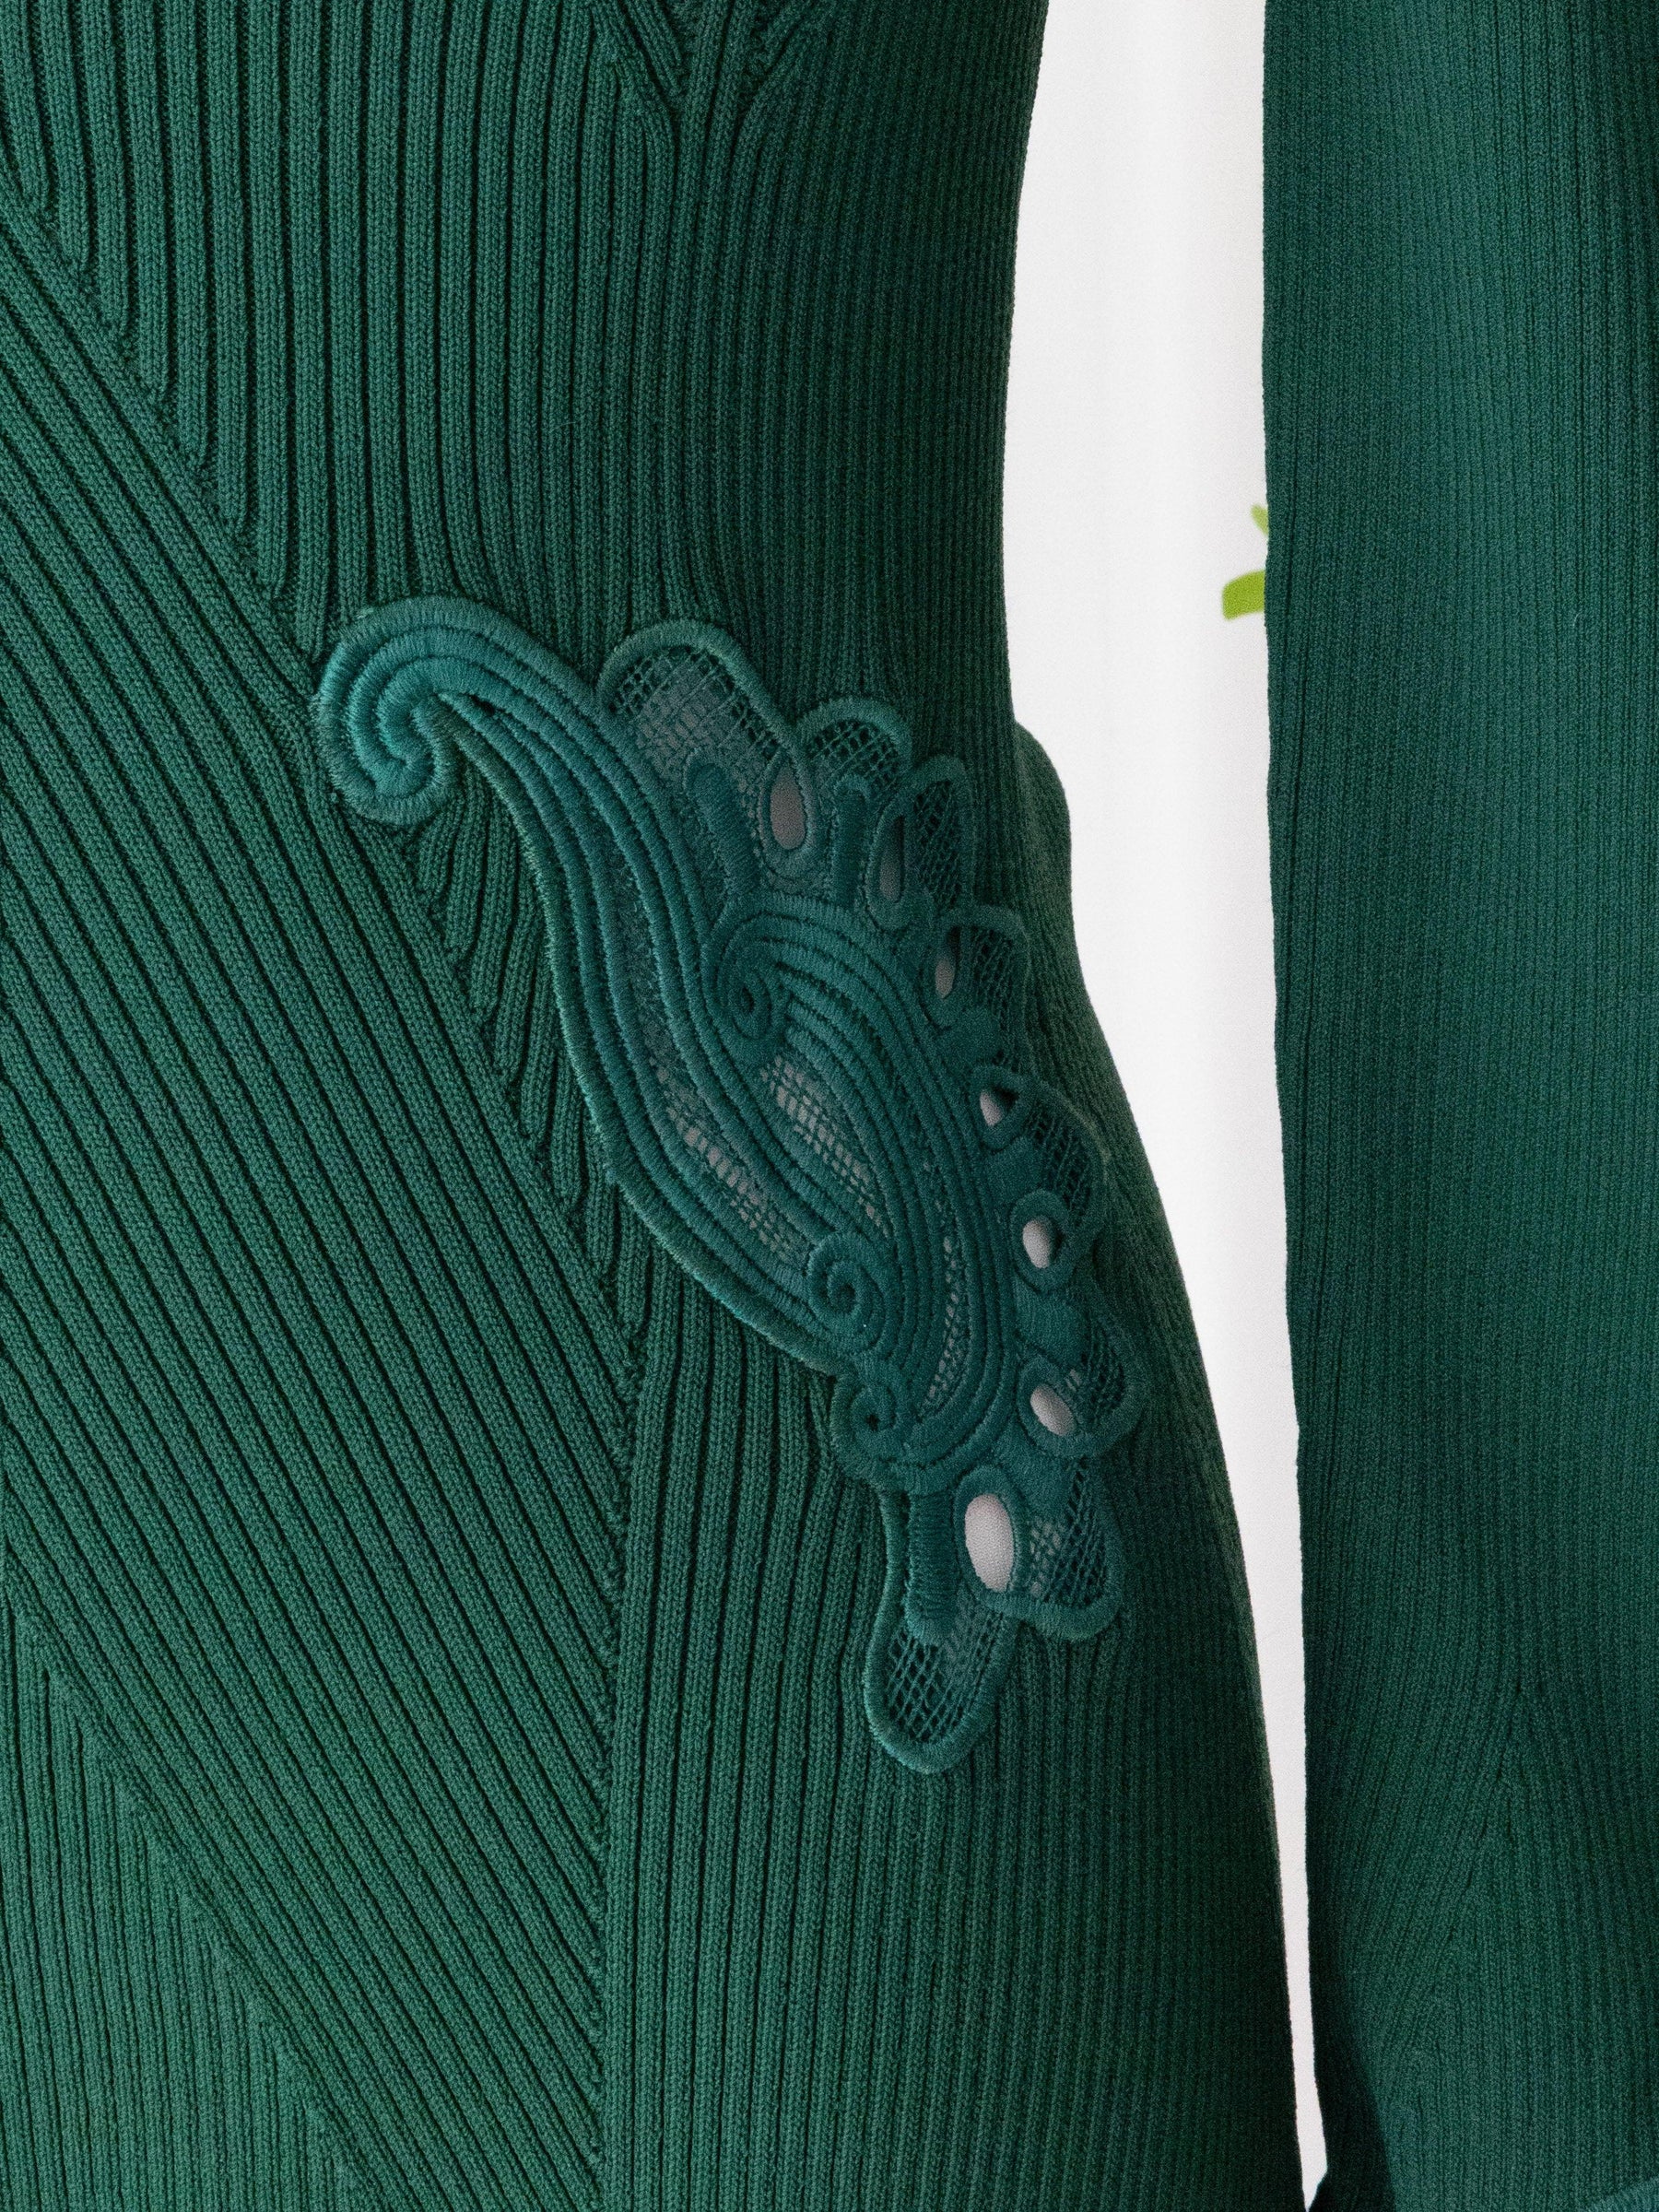 Elegant Feathered Knit Midi Dress vacation dress | EnerChic ™ - EnerChic